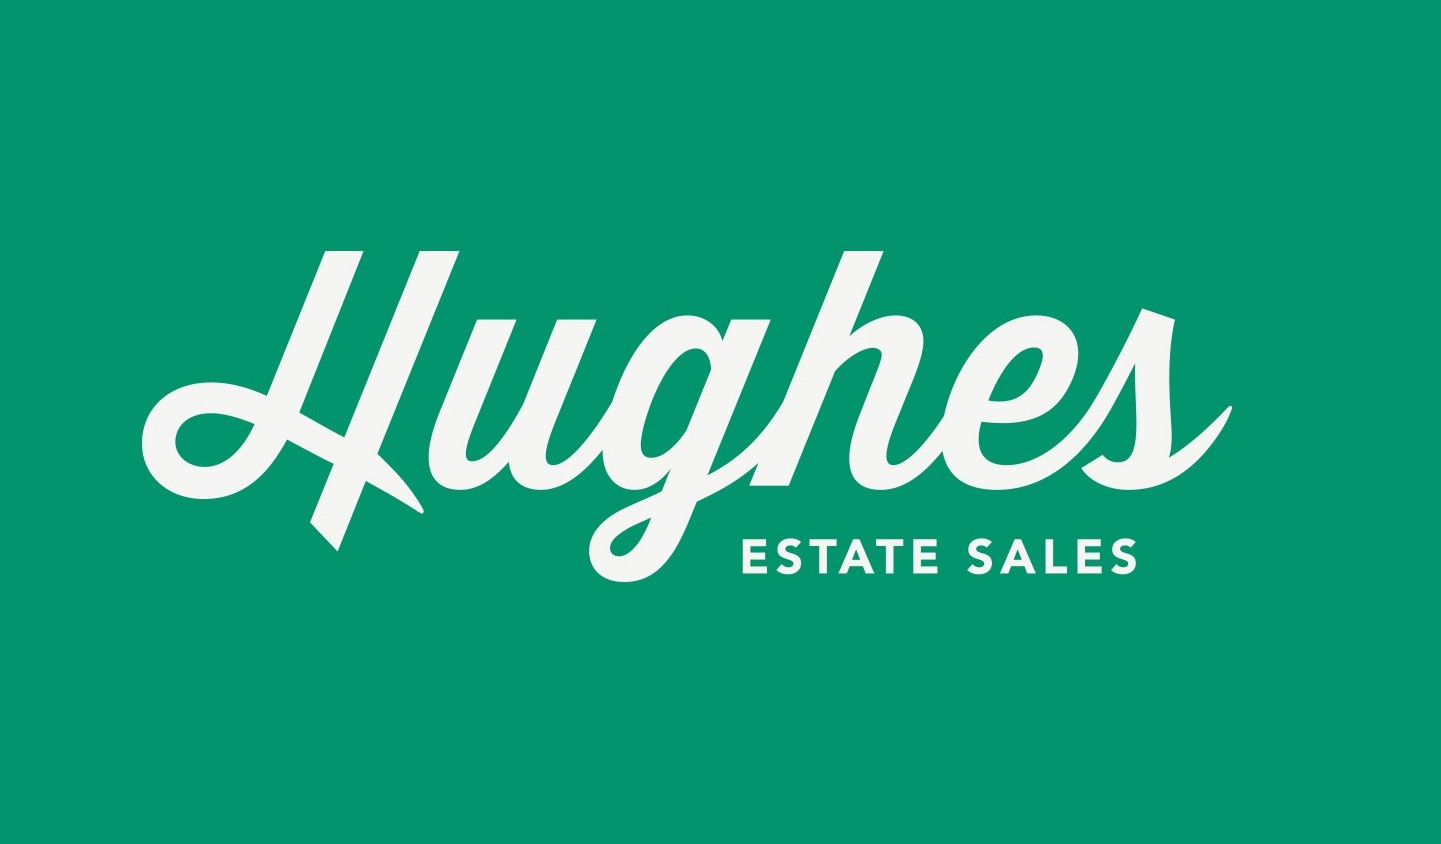 Hughes Estate Sales | DTLA Hughes Estates Sales | Estate Auction DTLA